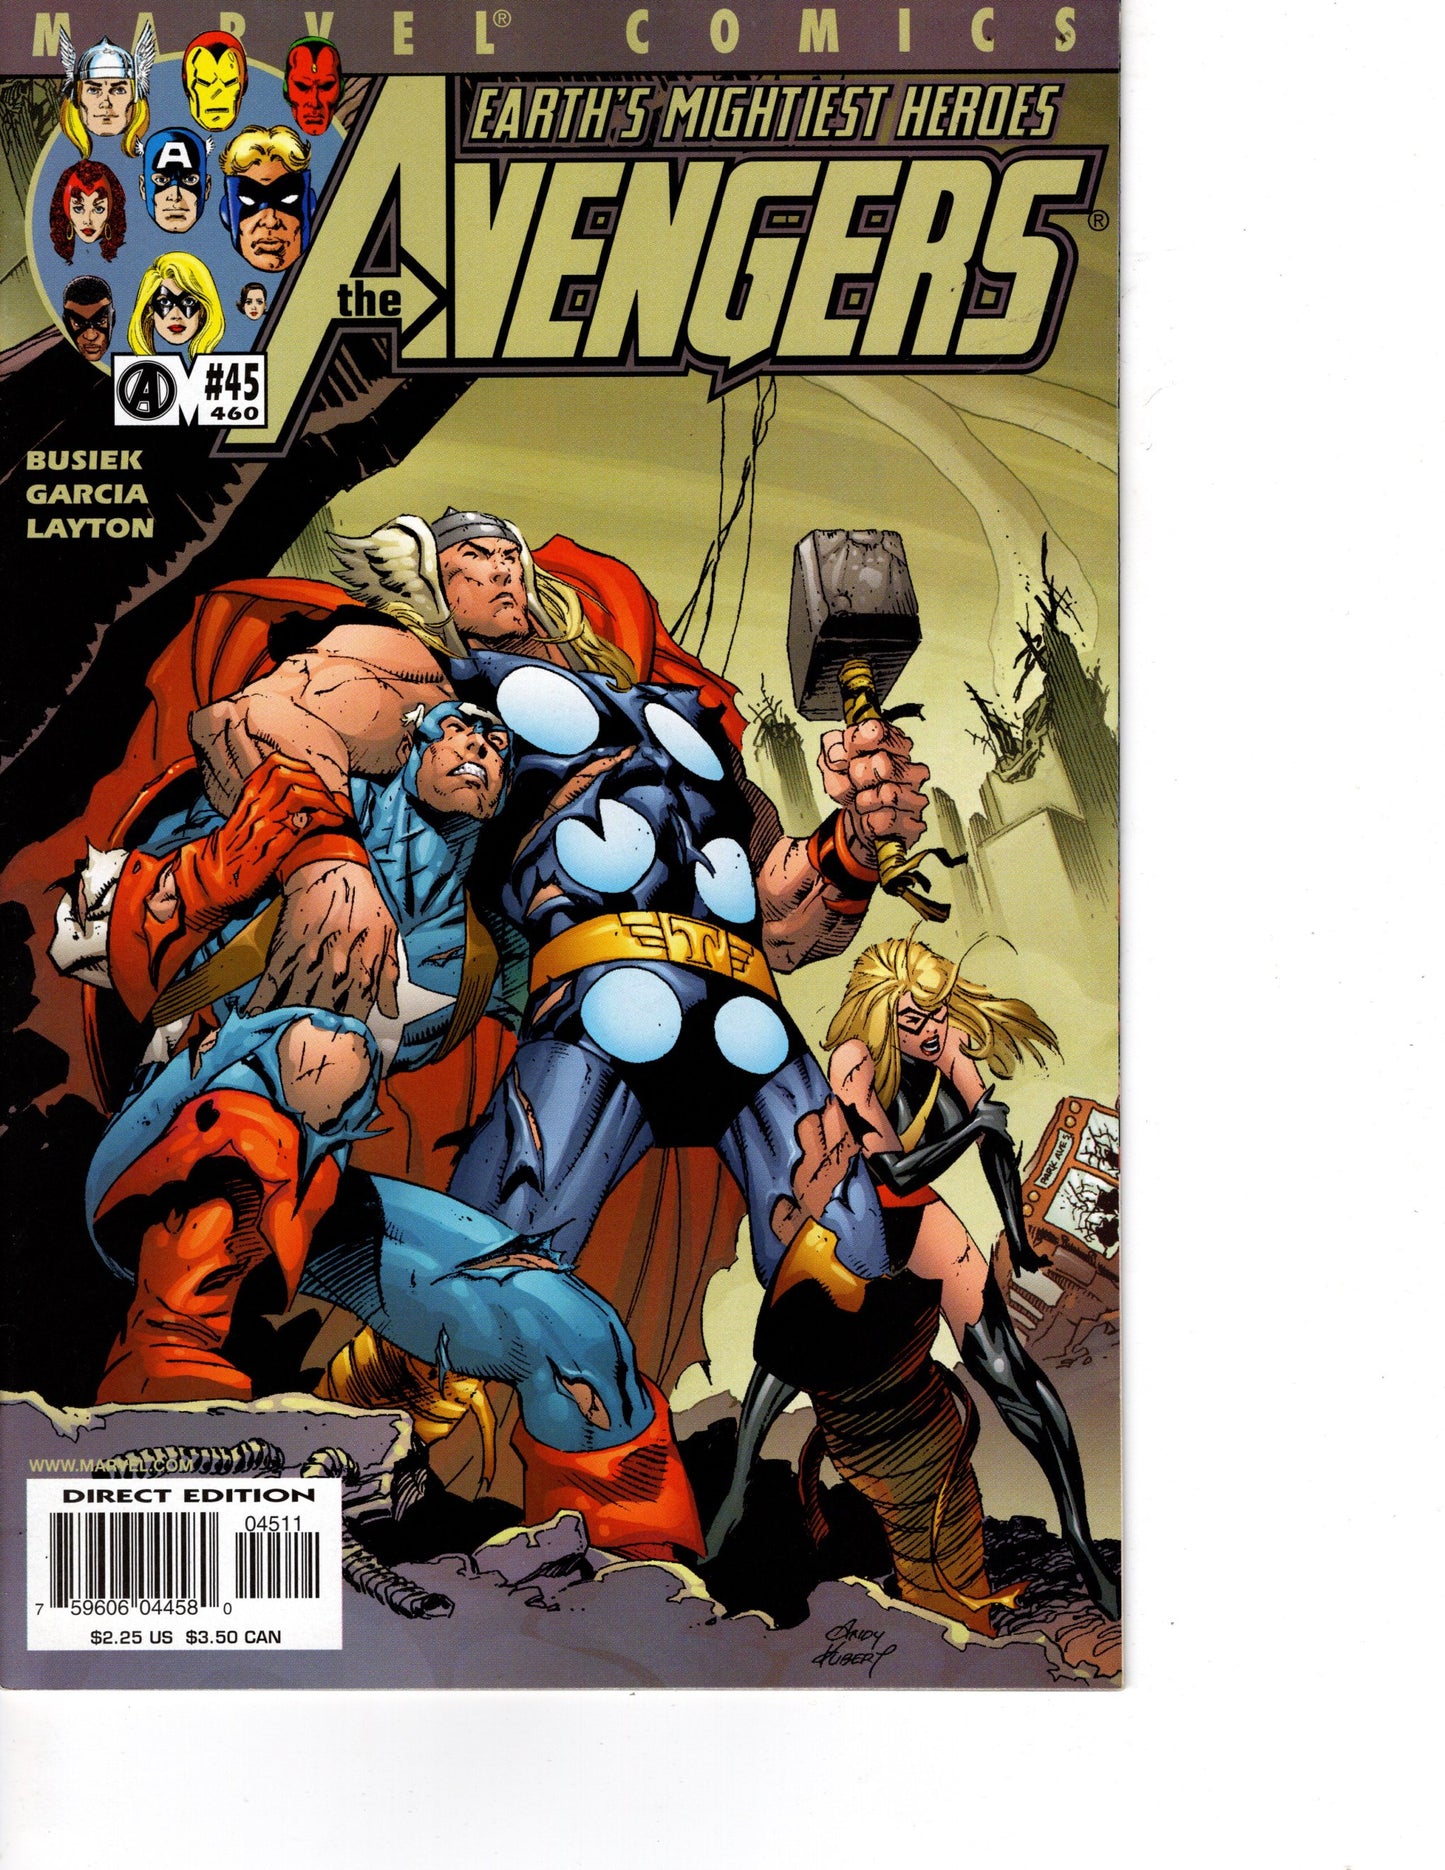 The Avengers #45